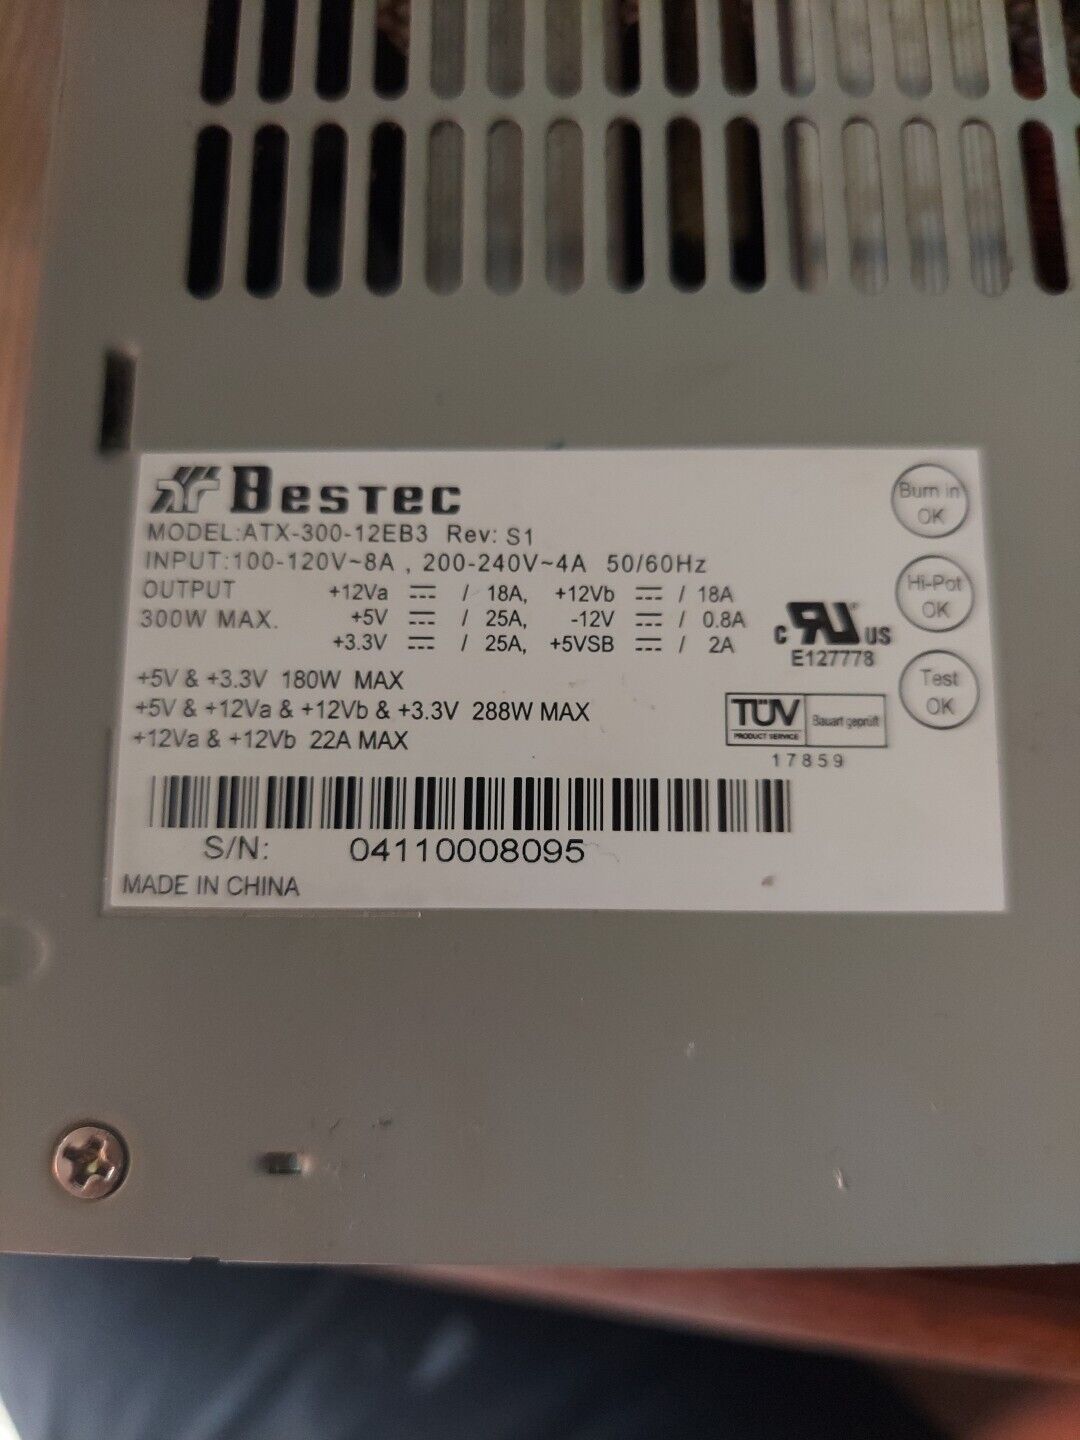 Bestec Model ATX -300-12EB3 Rev. S1 Desktop Power Supply Used*